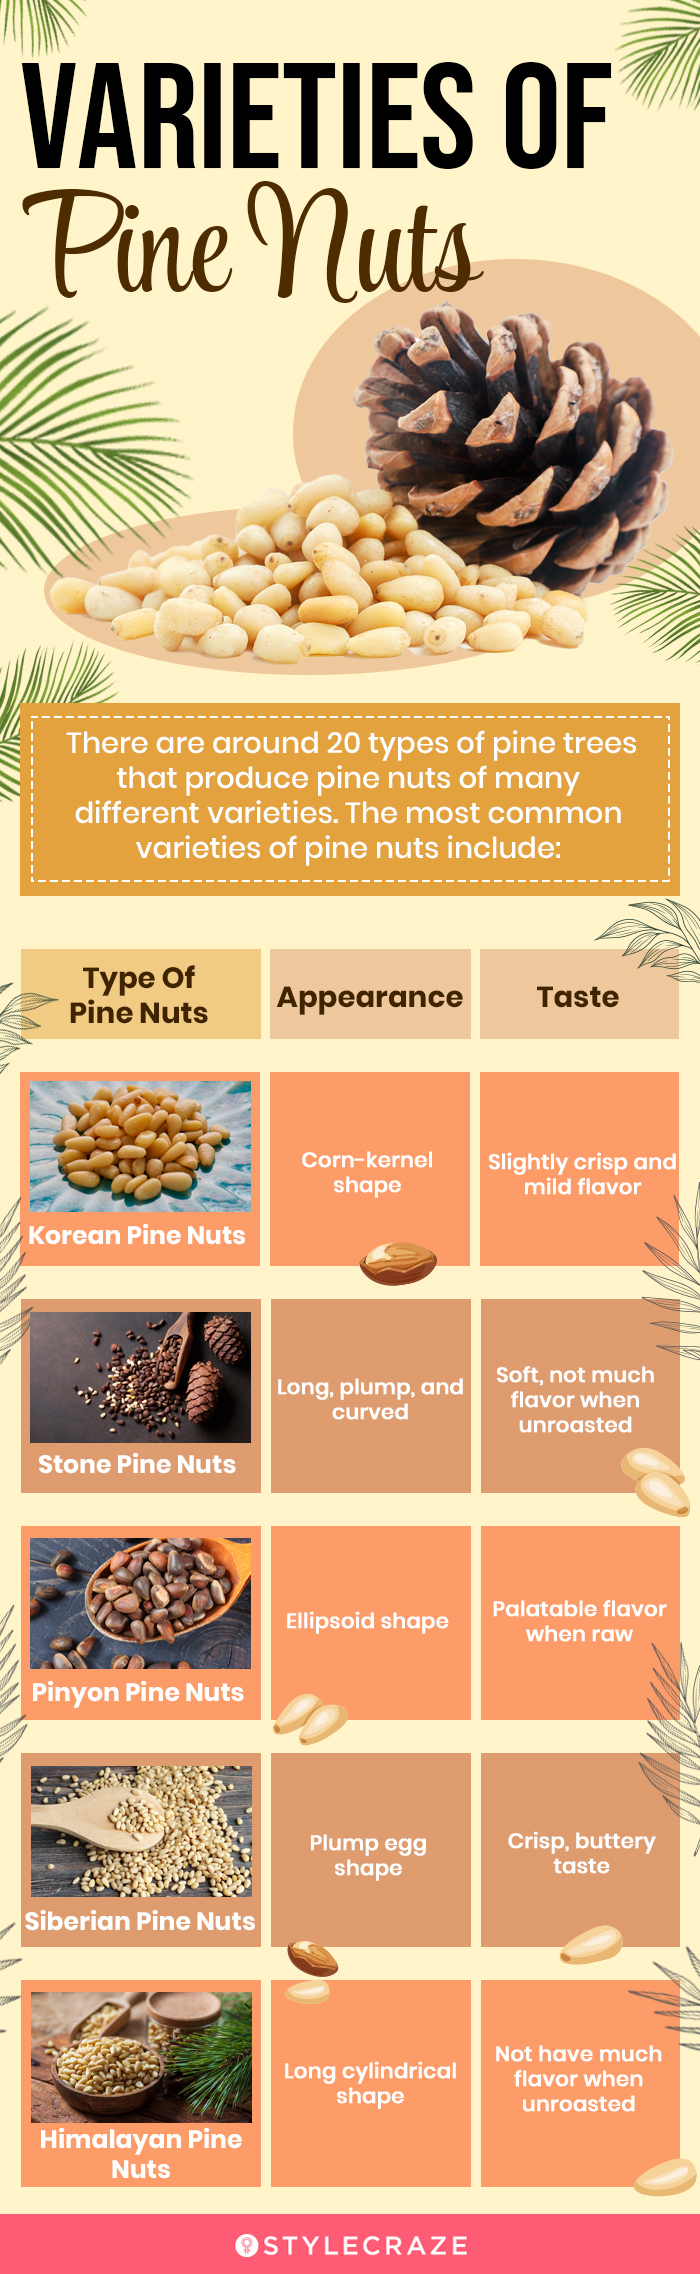 varieties of pine nuts [infographic]